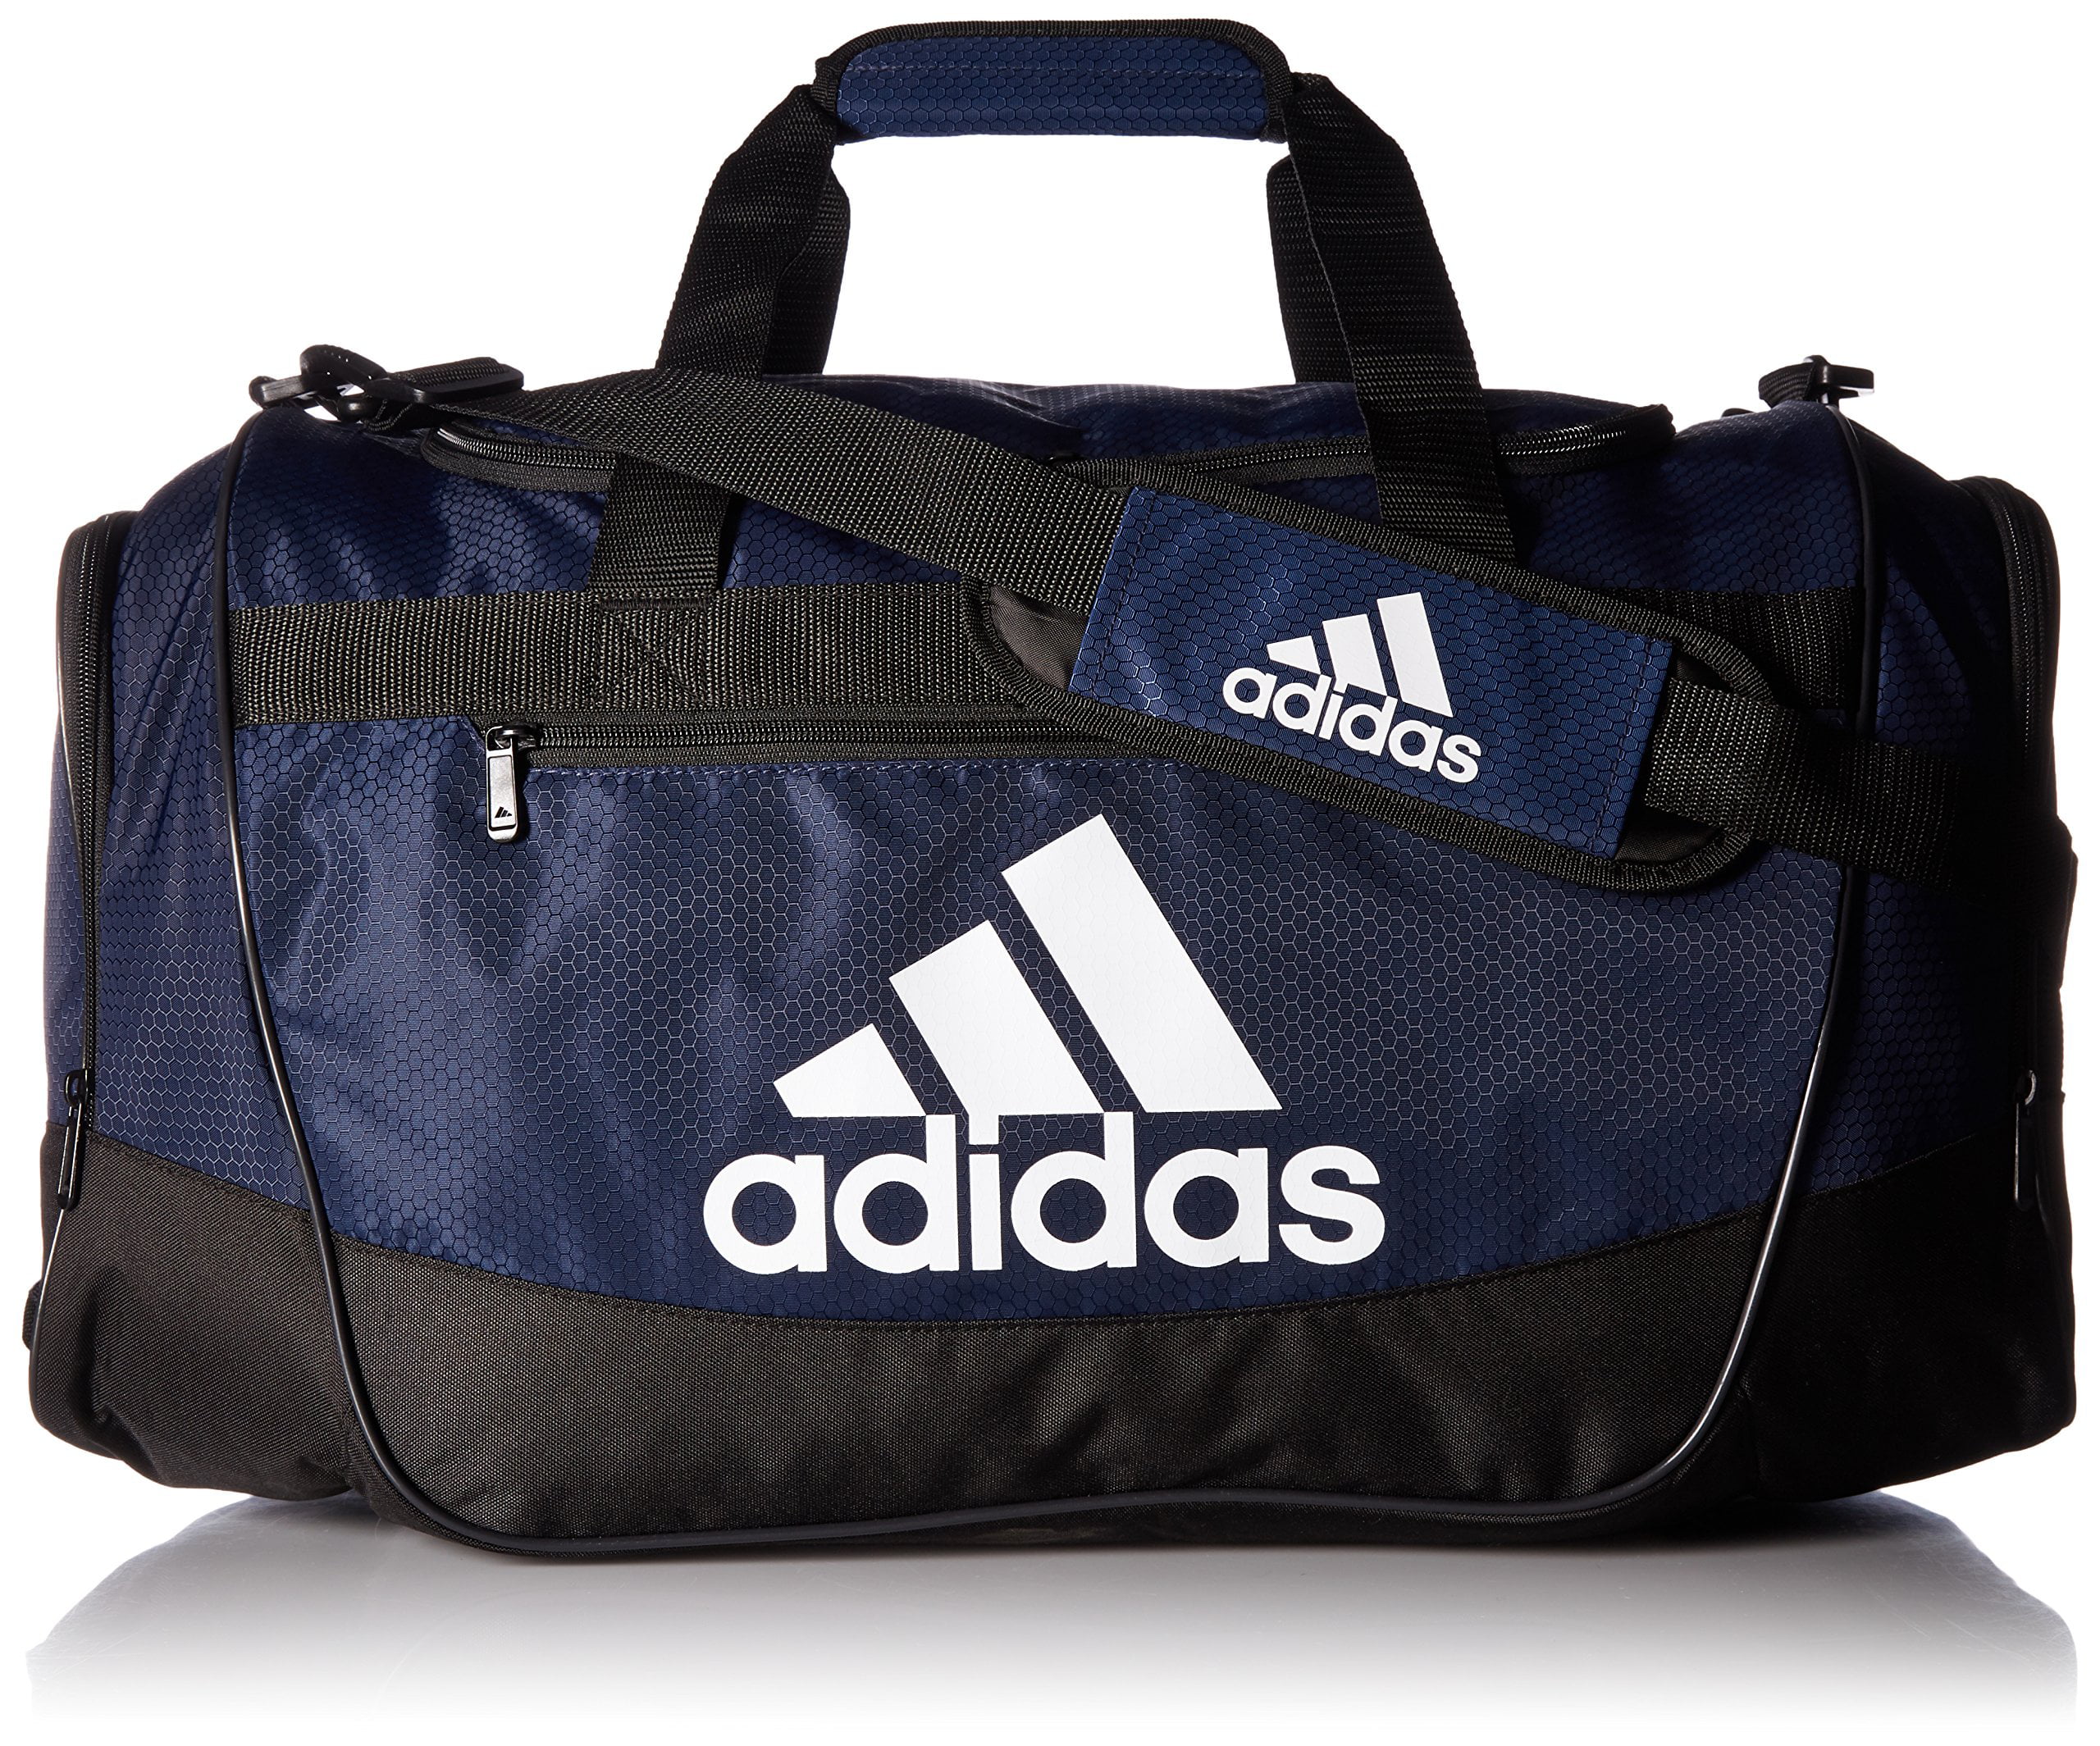 adidas Defender III medium duffel Bag, Onix Jersey/Black, One Size ...